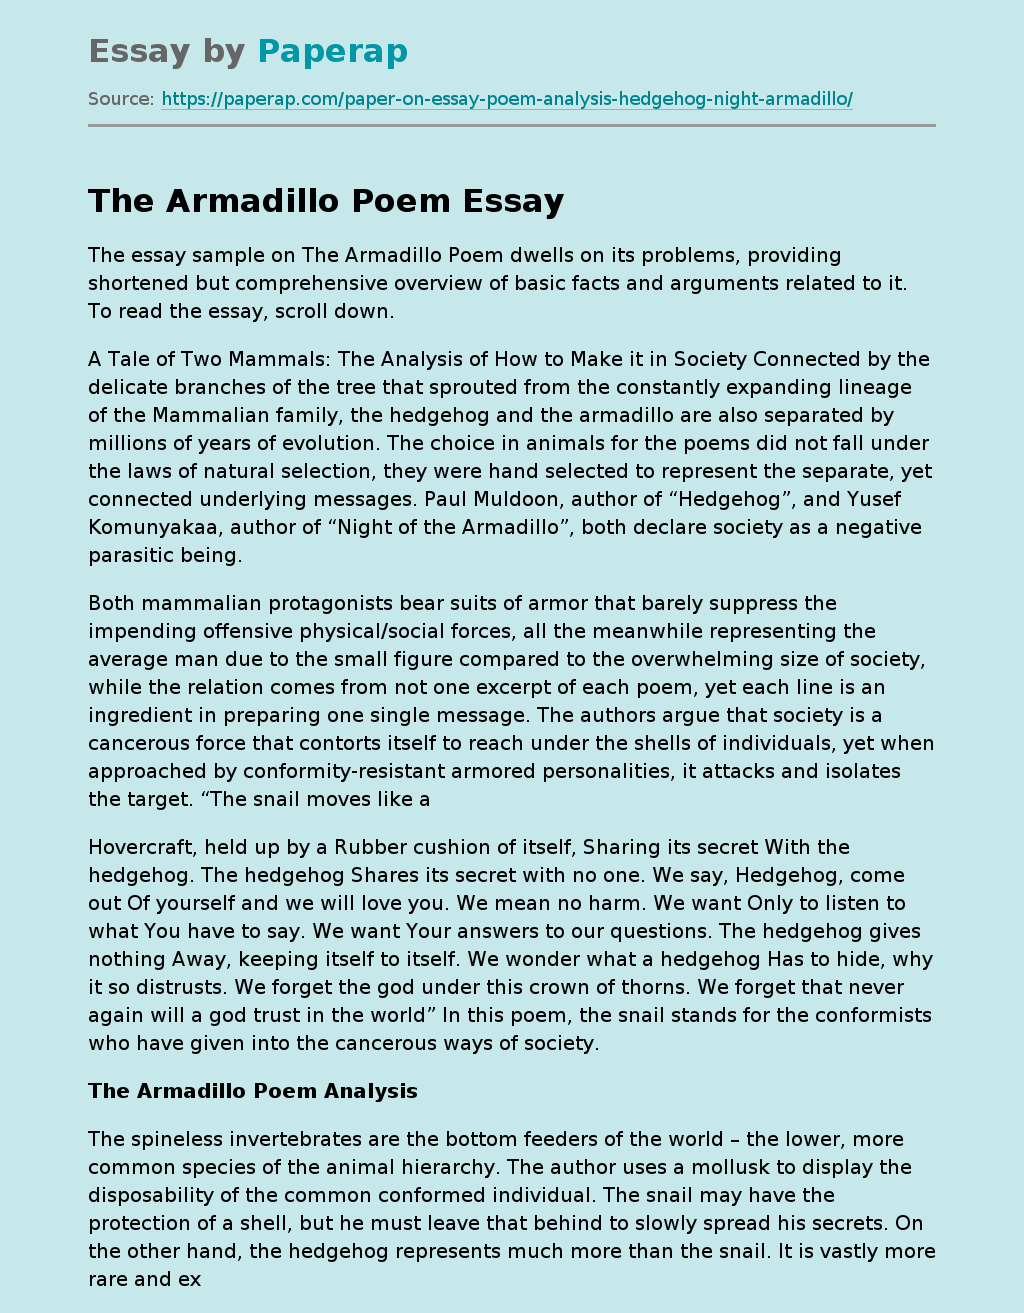 The Armadillo Poem